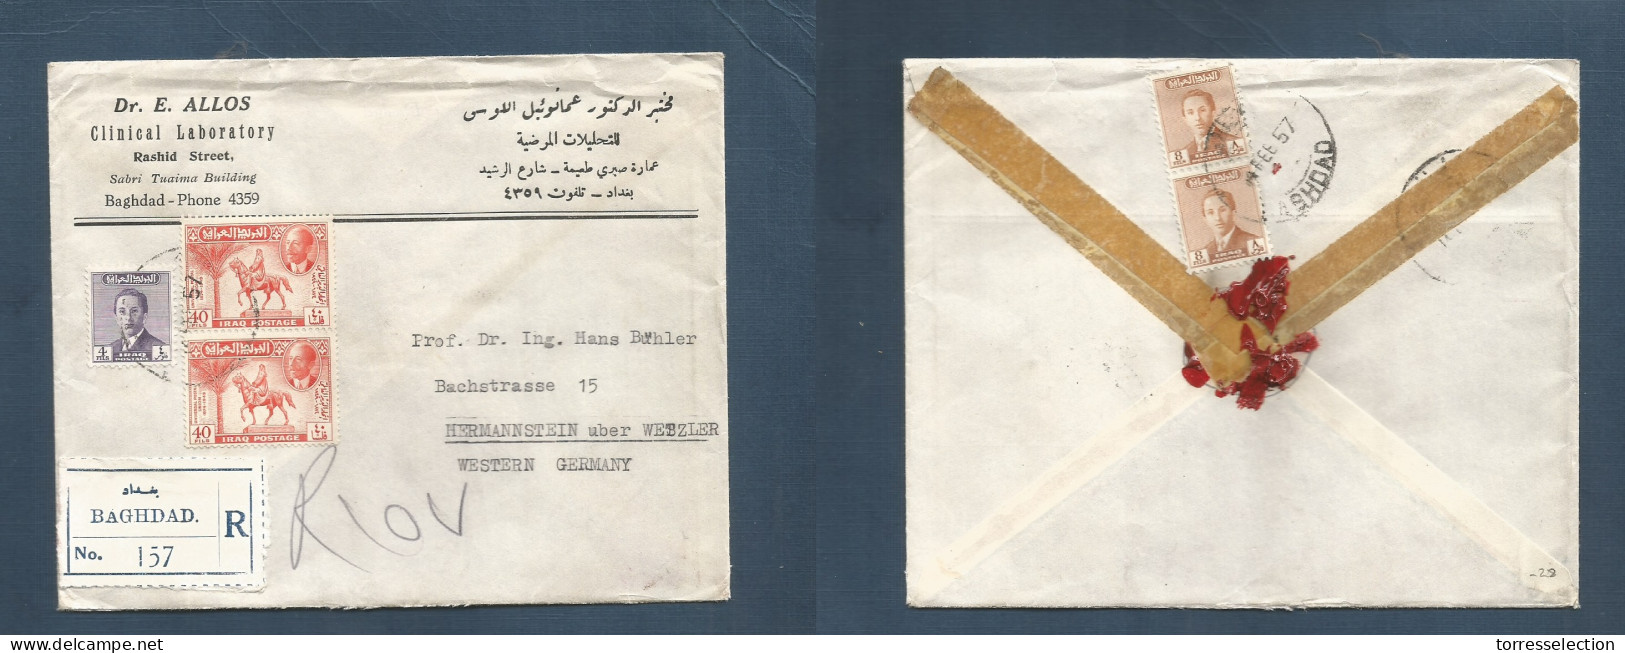 IRAQ. 1957 (14 Febr) Baghdad - West Germany, Hermannstein. Registered Multifkd Env At 84 Fils Rate. Clinical Laboratory. - Iraq